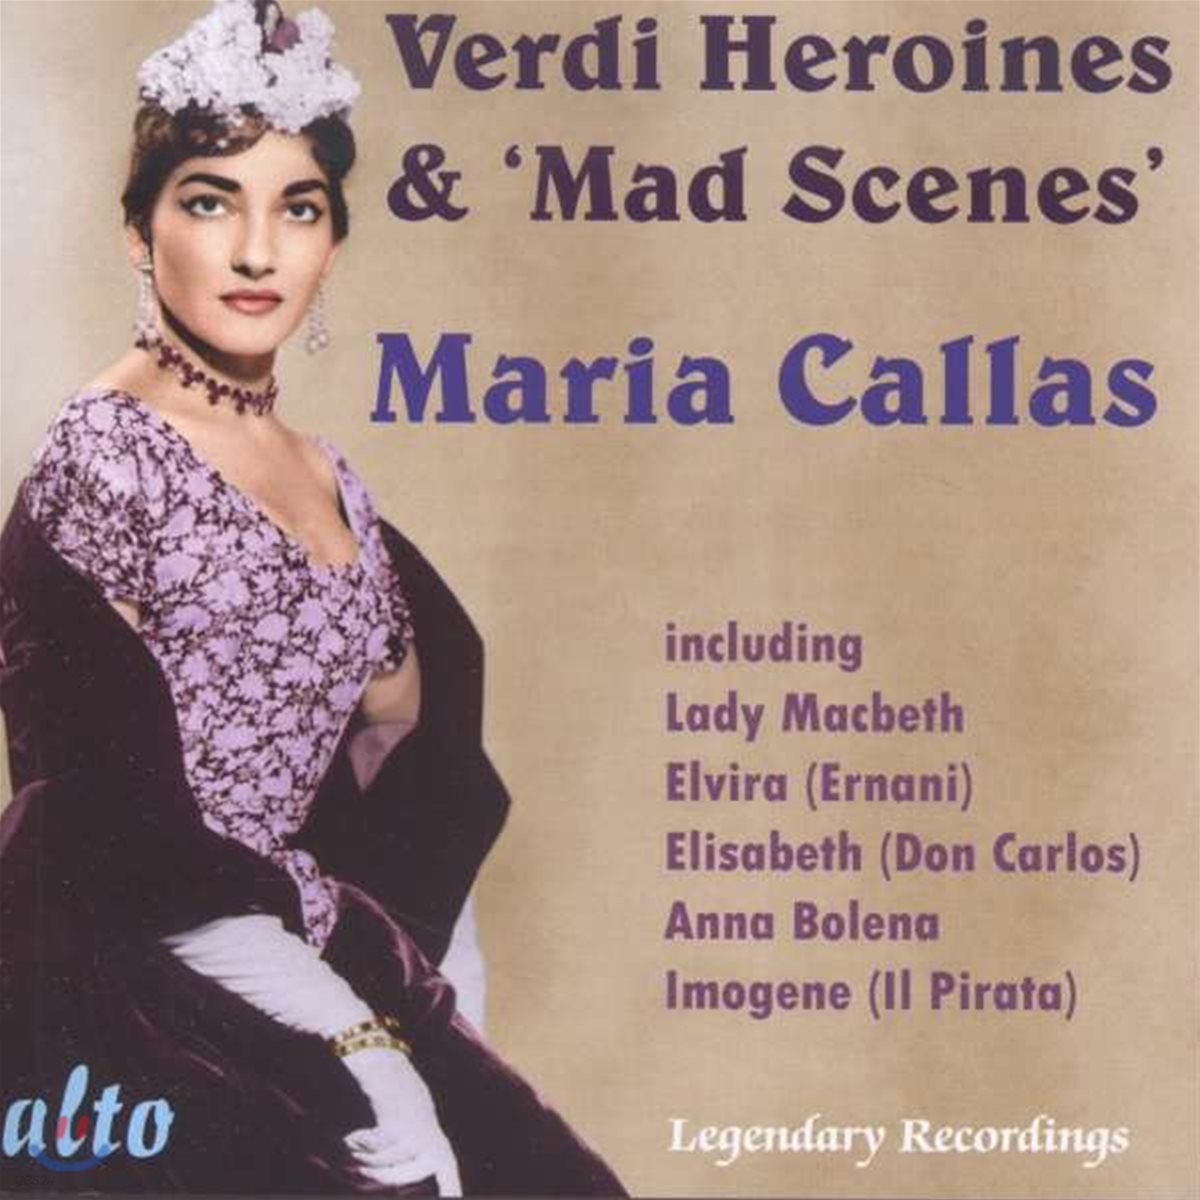 Maria Callas 마리아 칼라스가 부르는 베르디 오페라 아리아 (Verdi Arias, Mad Scenes)